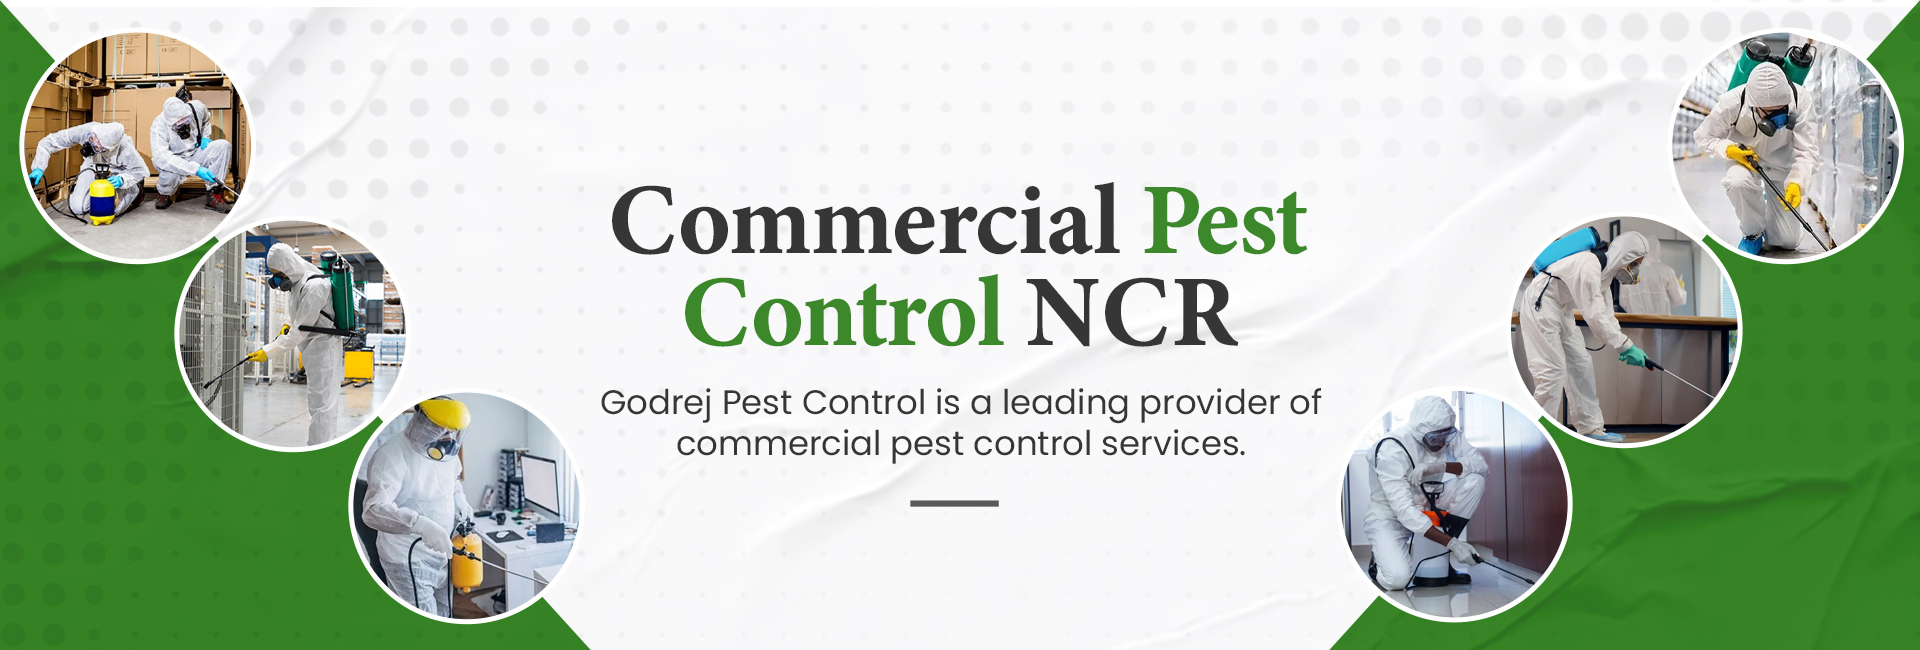 godrej pest control commercial ncr service